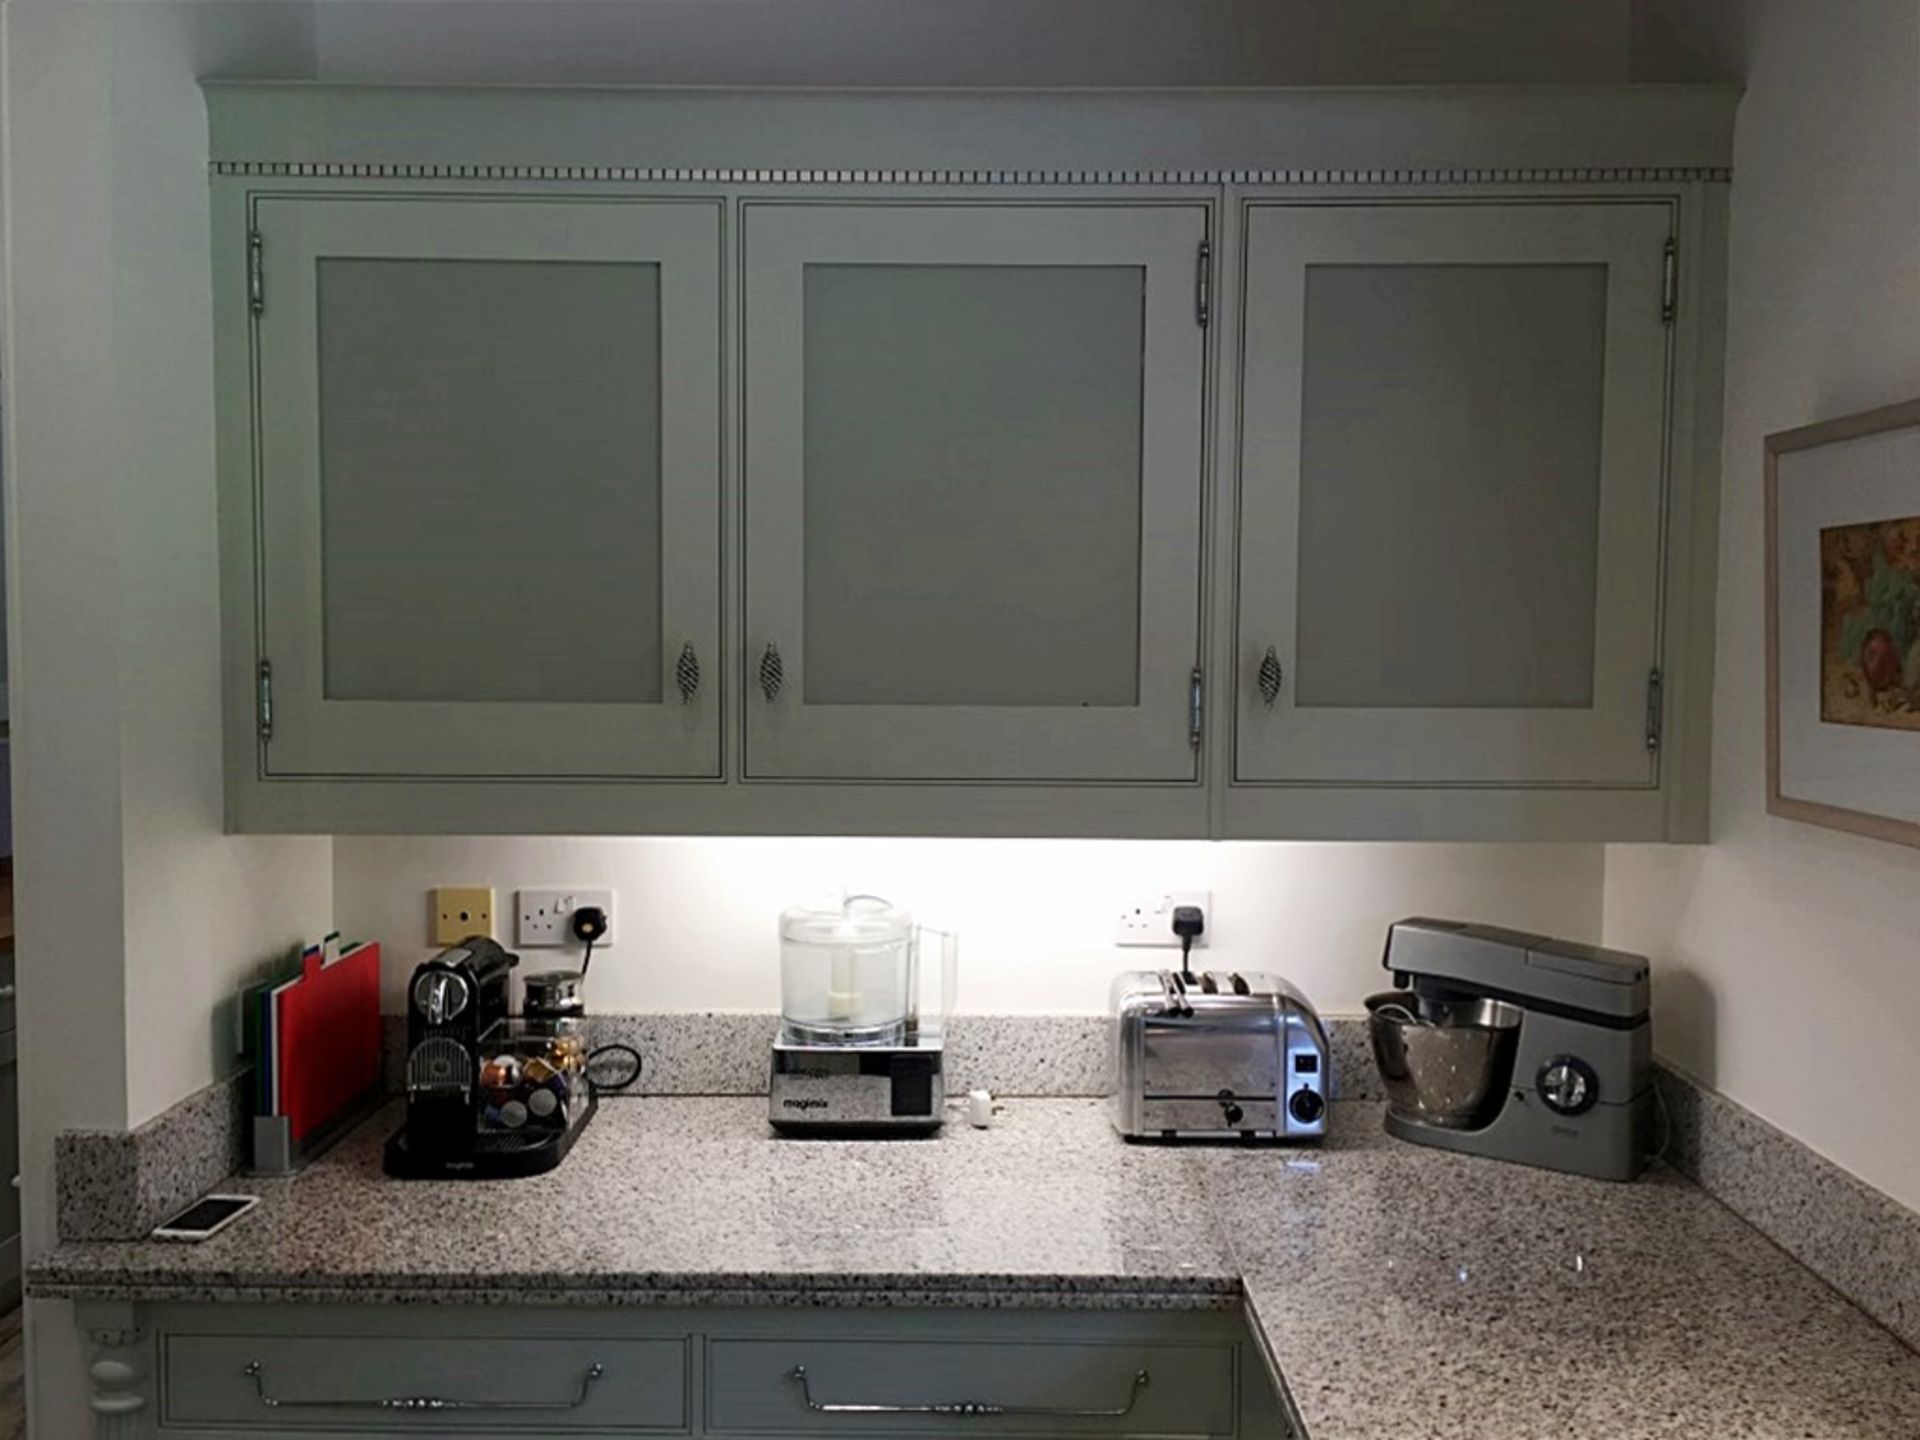 1 x Mark Wilkinson Designer kitchen With Miele Appliances & Granite Worksurfaces - No VAT - Image 40 of 65